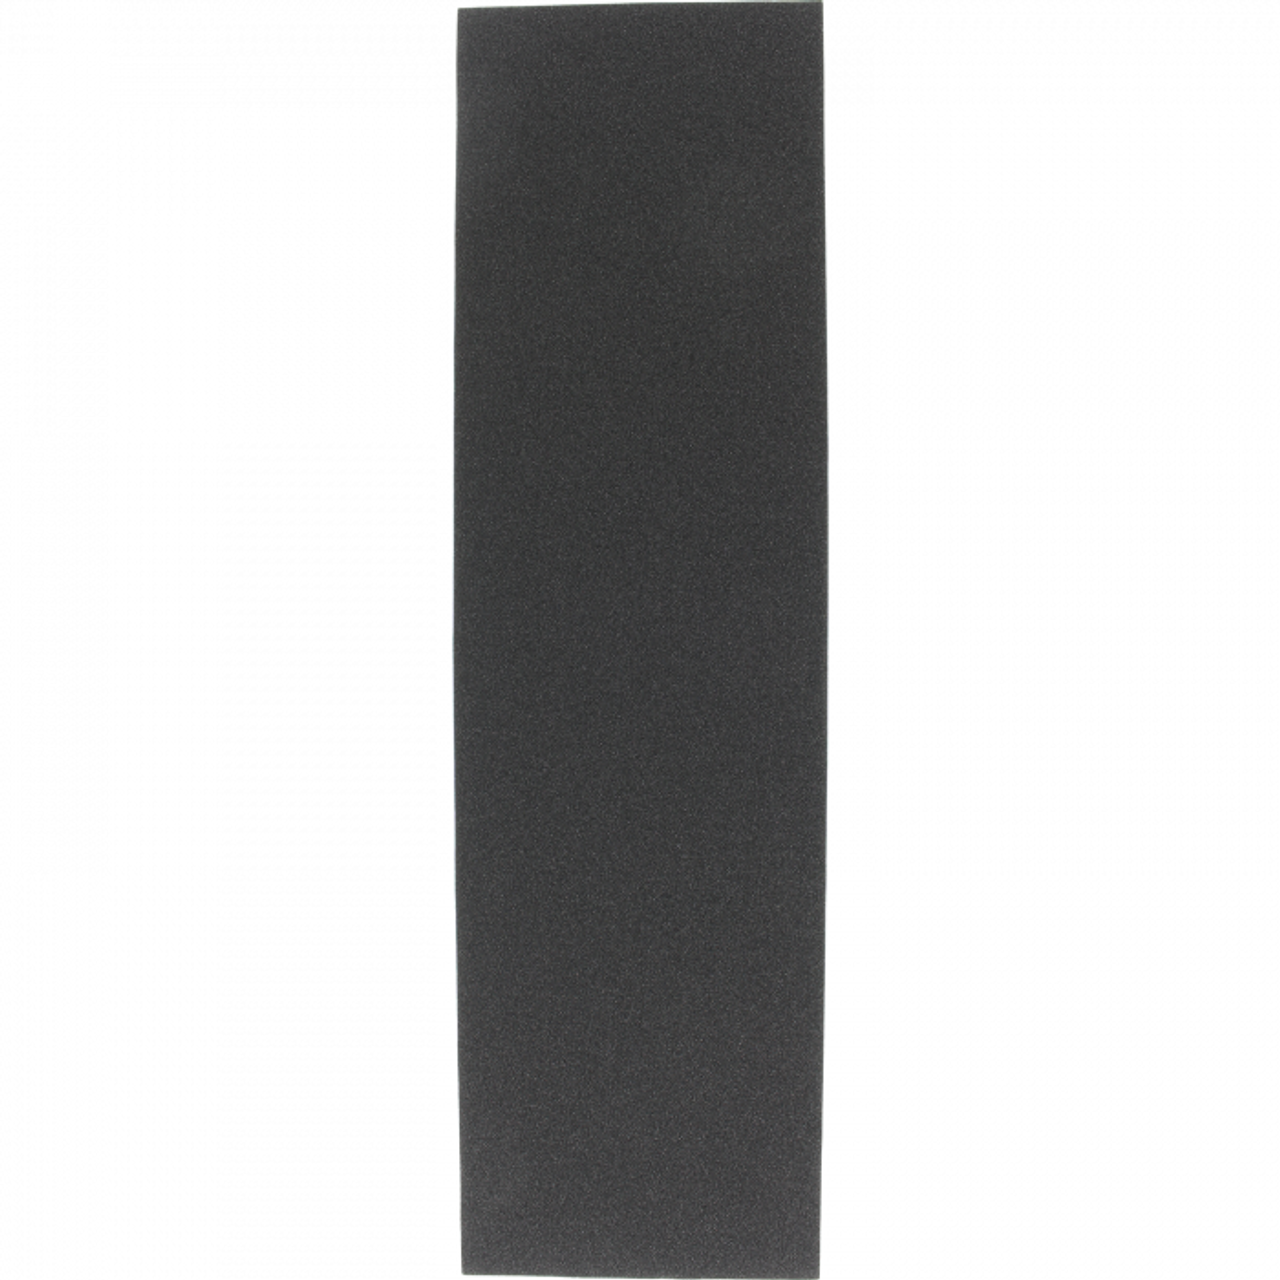 Pepper G5 Grip Tape Sheet Black 9x33.5